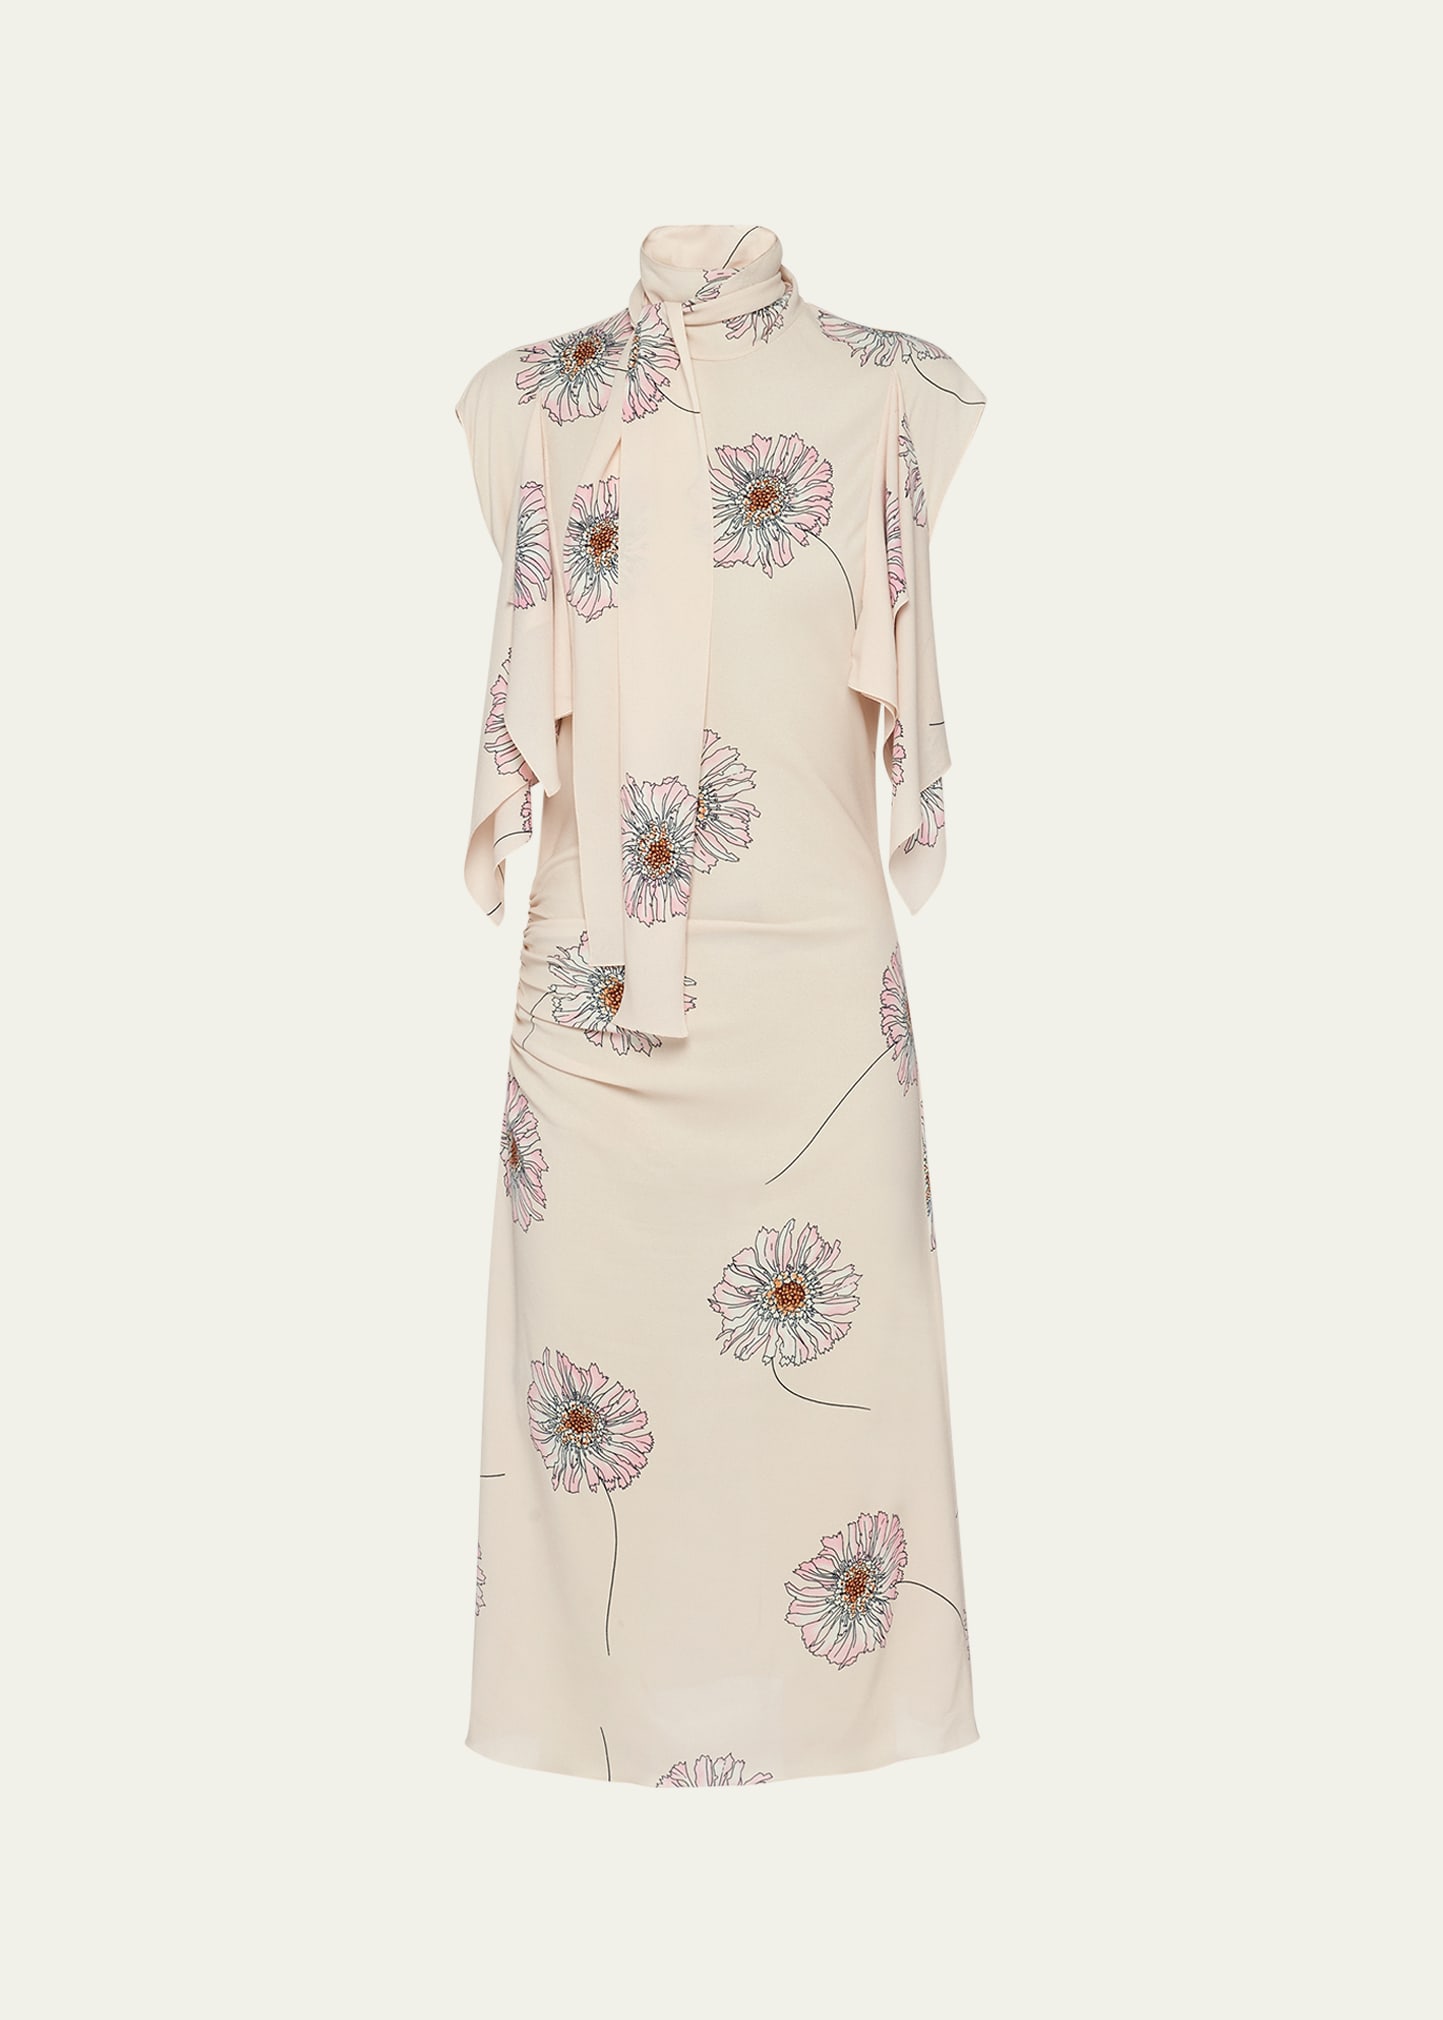 Prada Women's Printed Sablé Dress With Scarf Collar In F0770 Cammeo